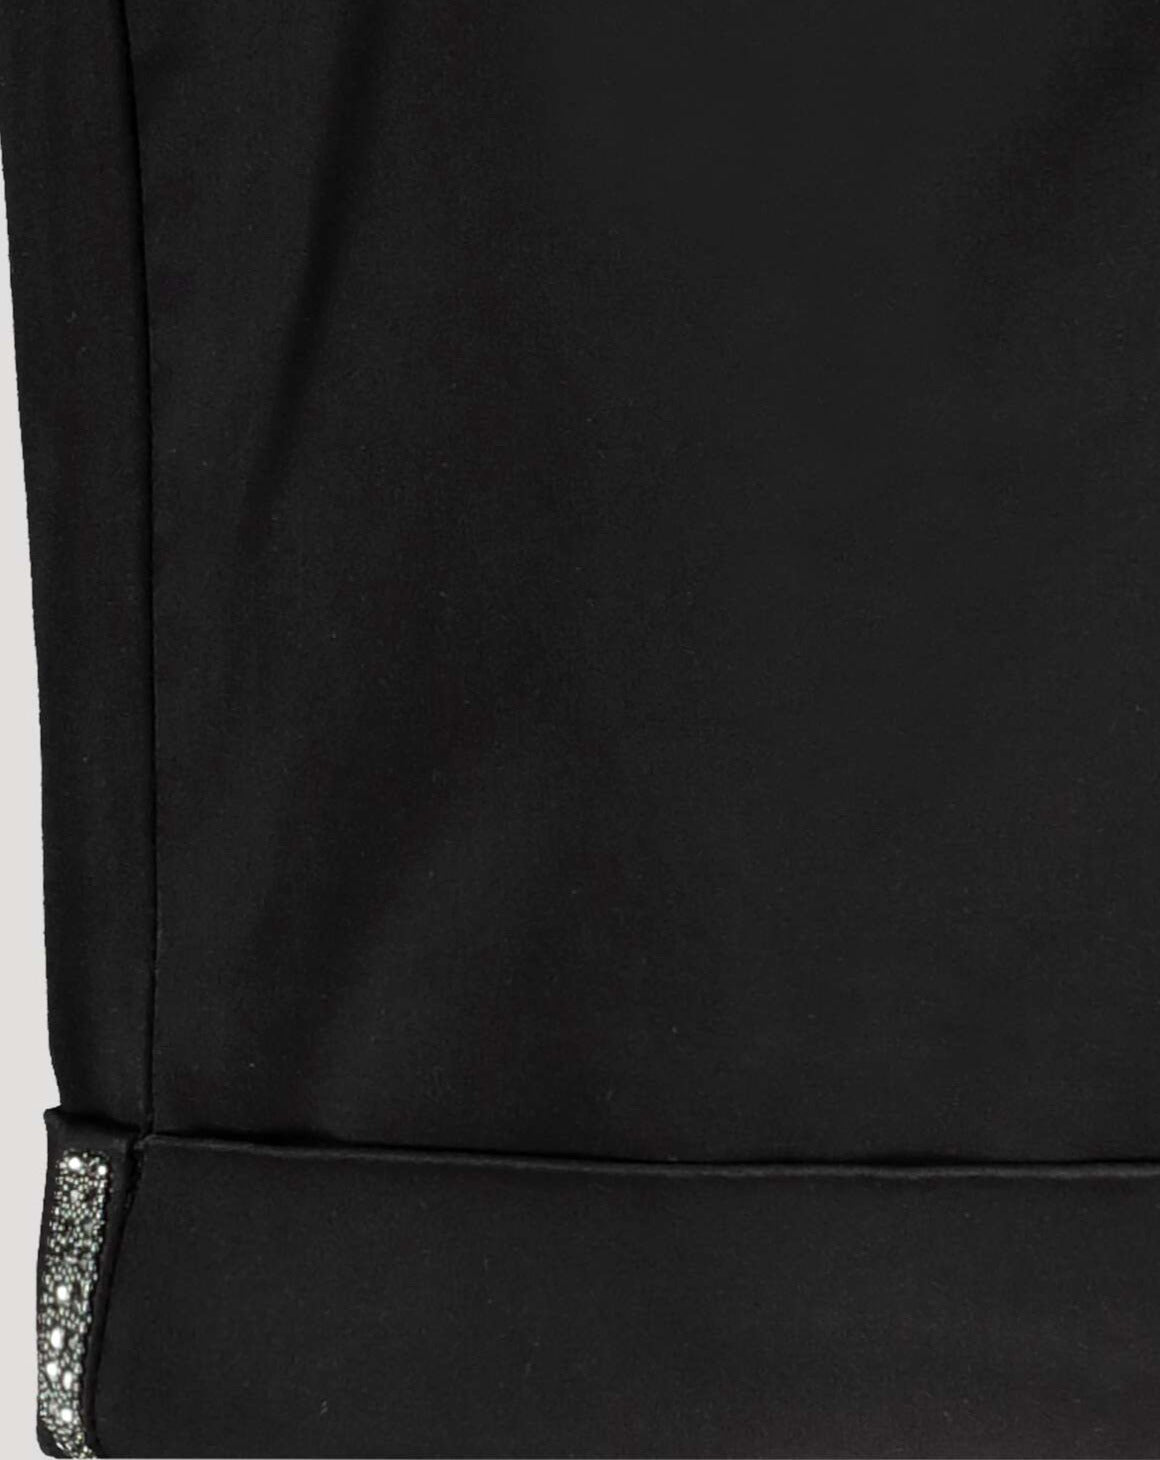 Monari Bermuda Shorts - Black